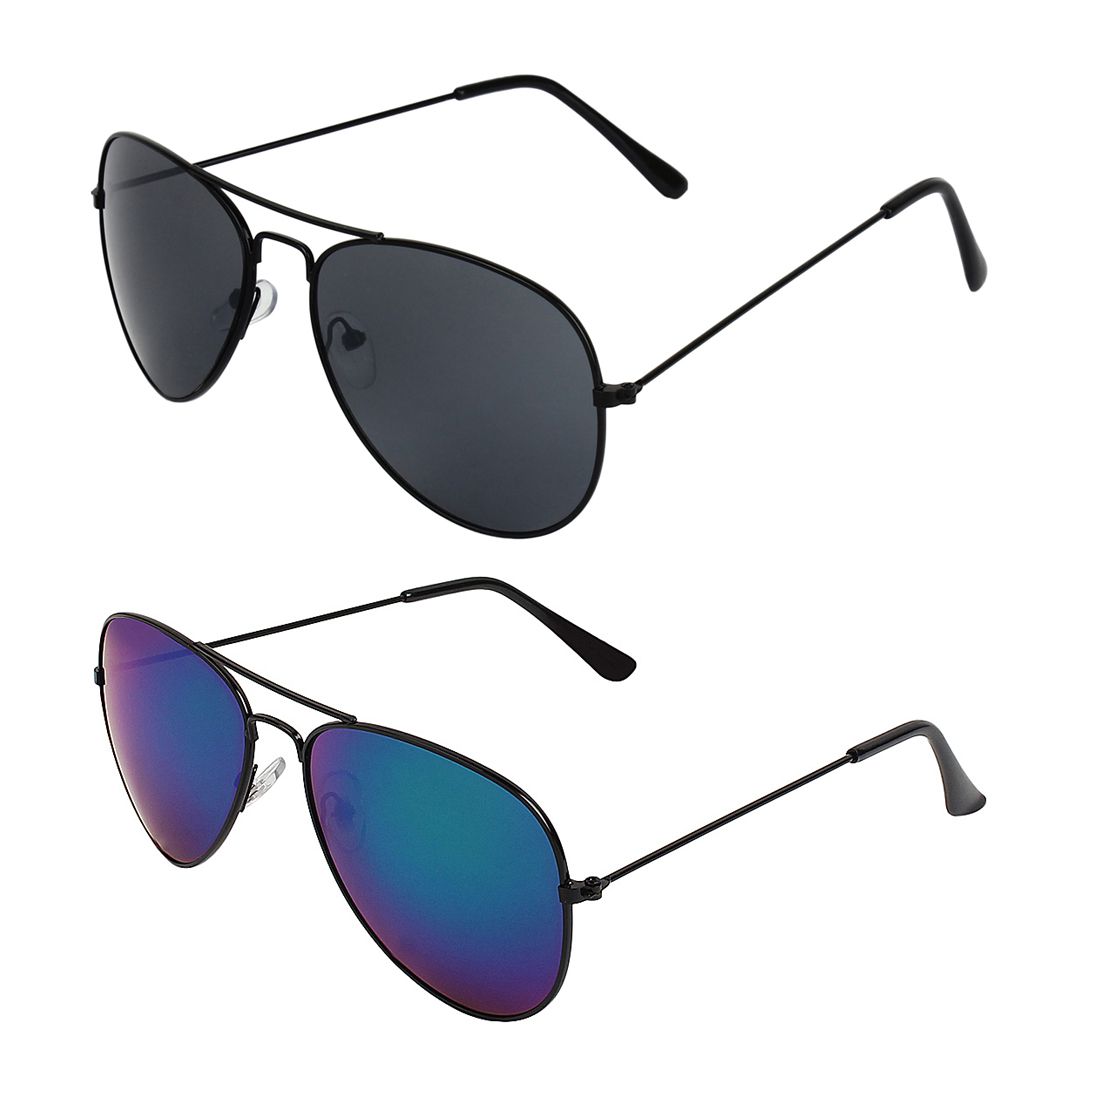 Abner Sunglasses Combo ( 2 pairs of sunglasses ) - Buy Abner Sunglasses ...